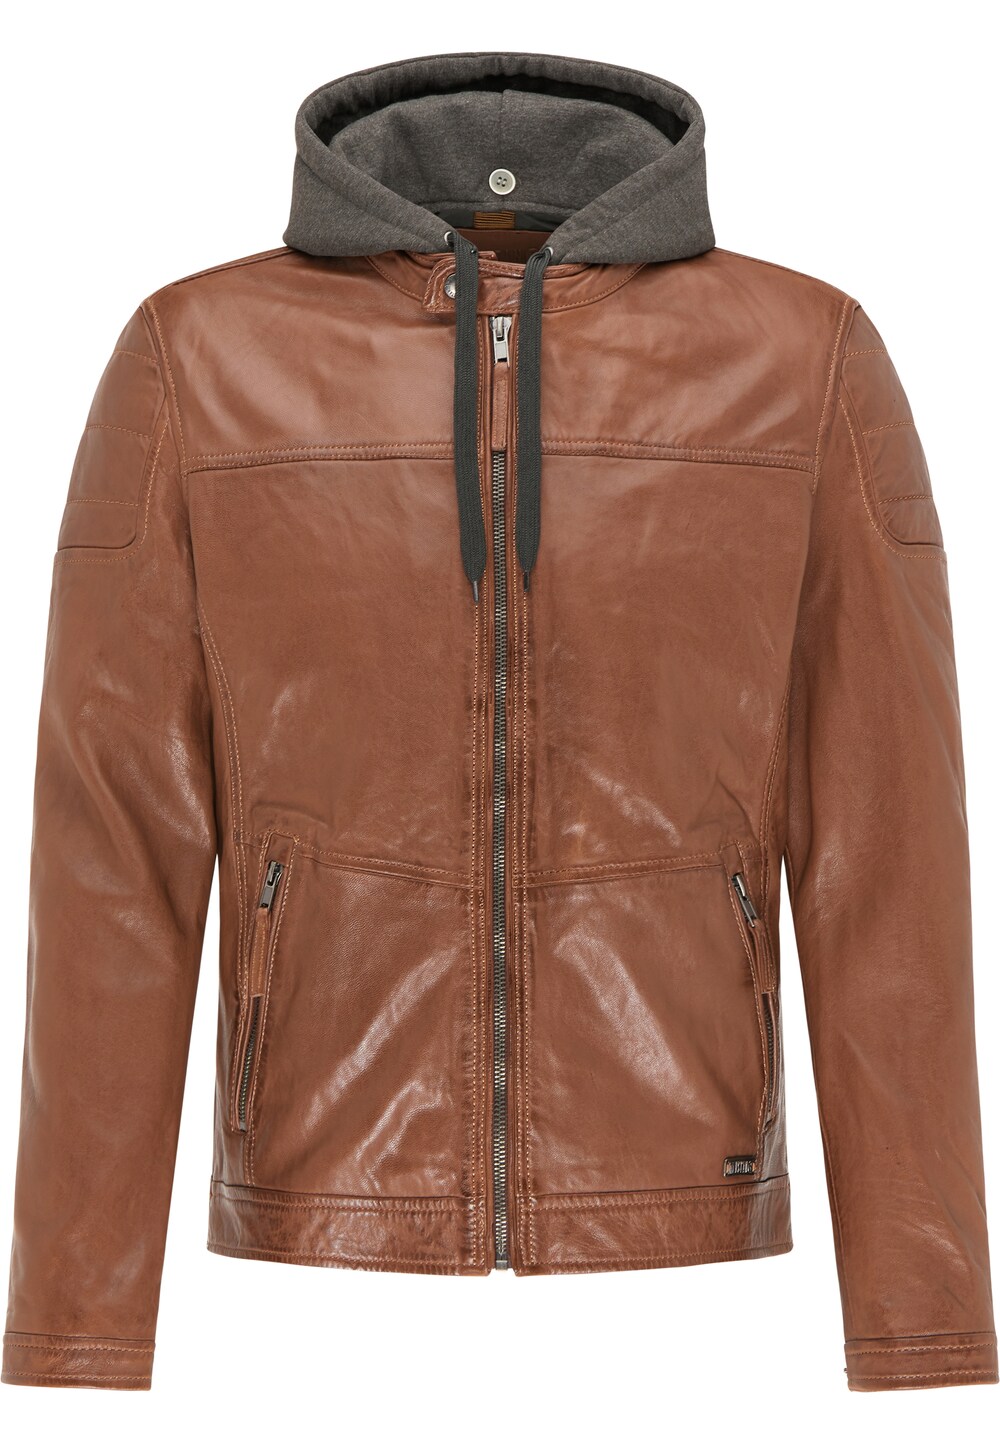 Межсезонная куртка Mustang, коричневый межсезонная куртка mustang ryana коричневый